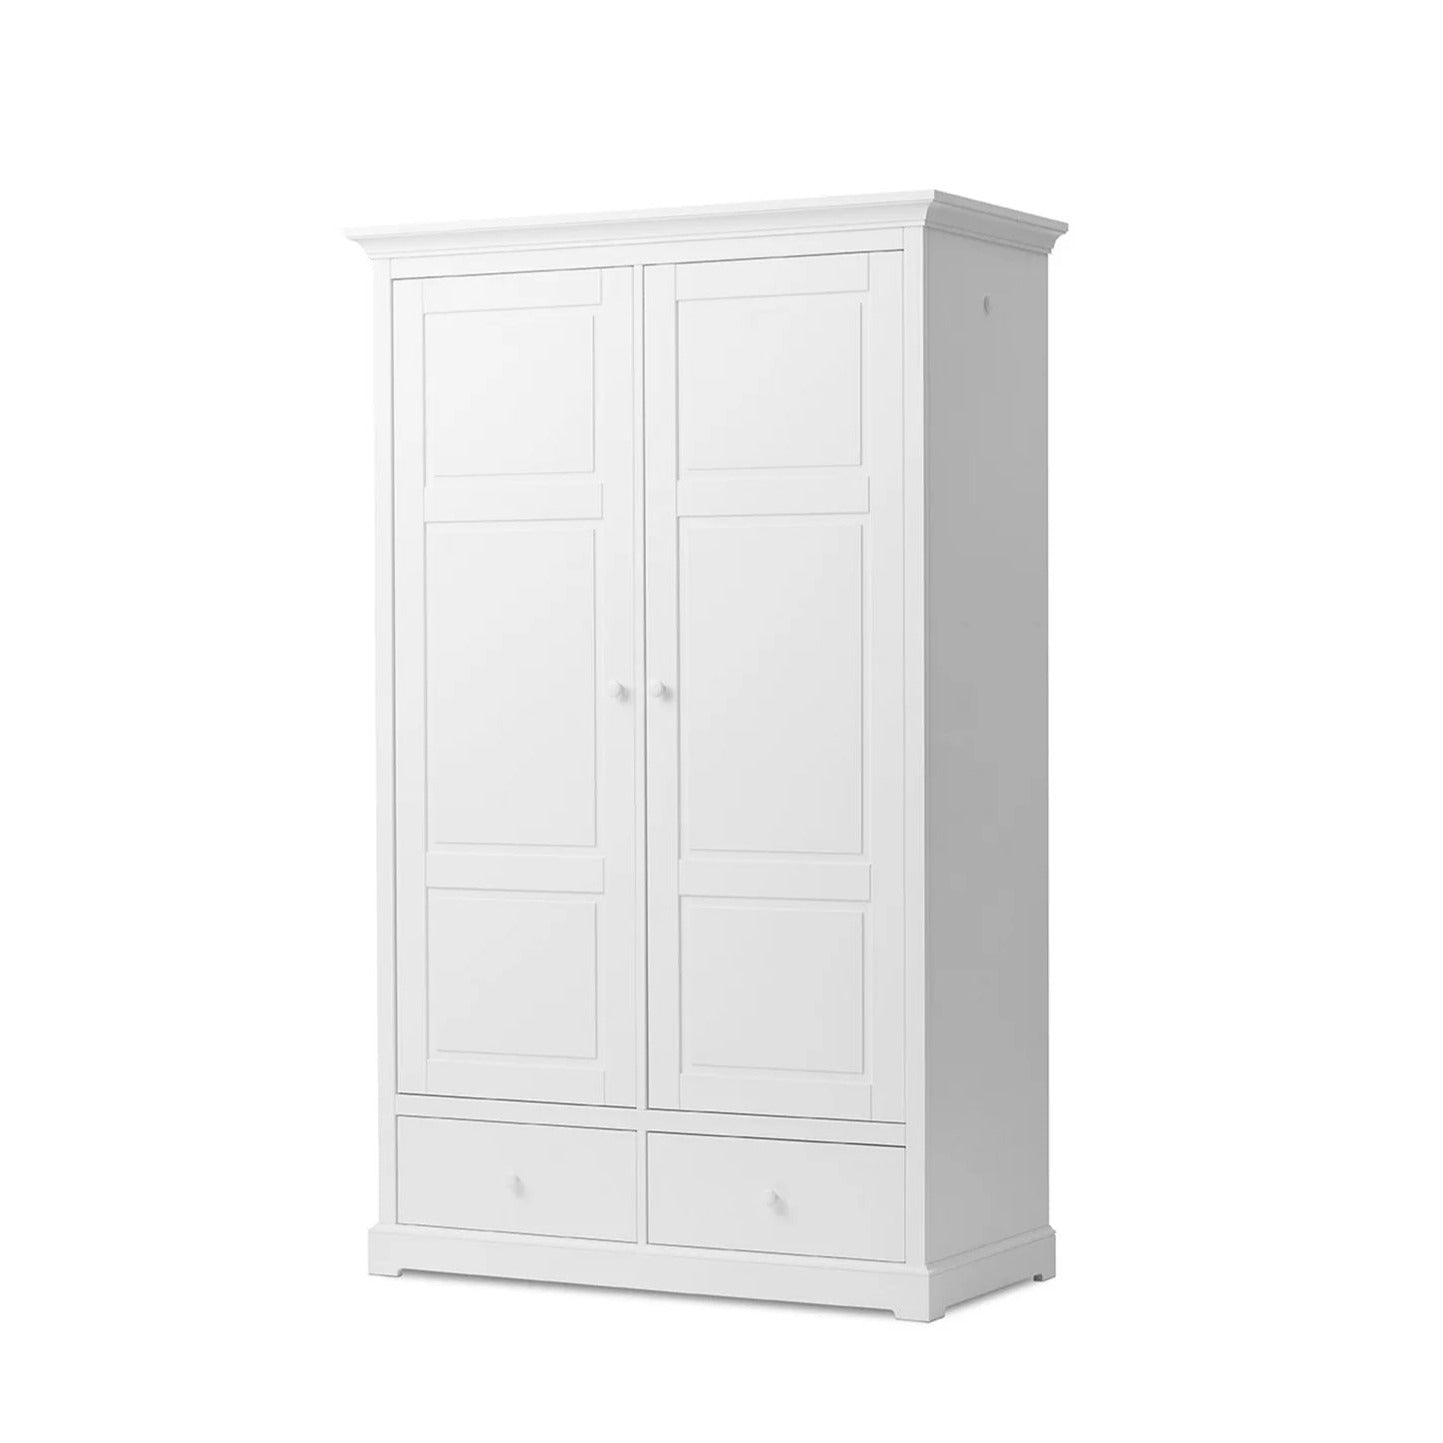 Oliver Furniture Seaside Wardrobe - 2 Doors